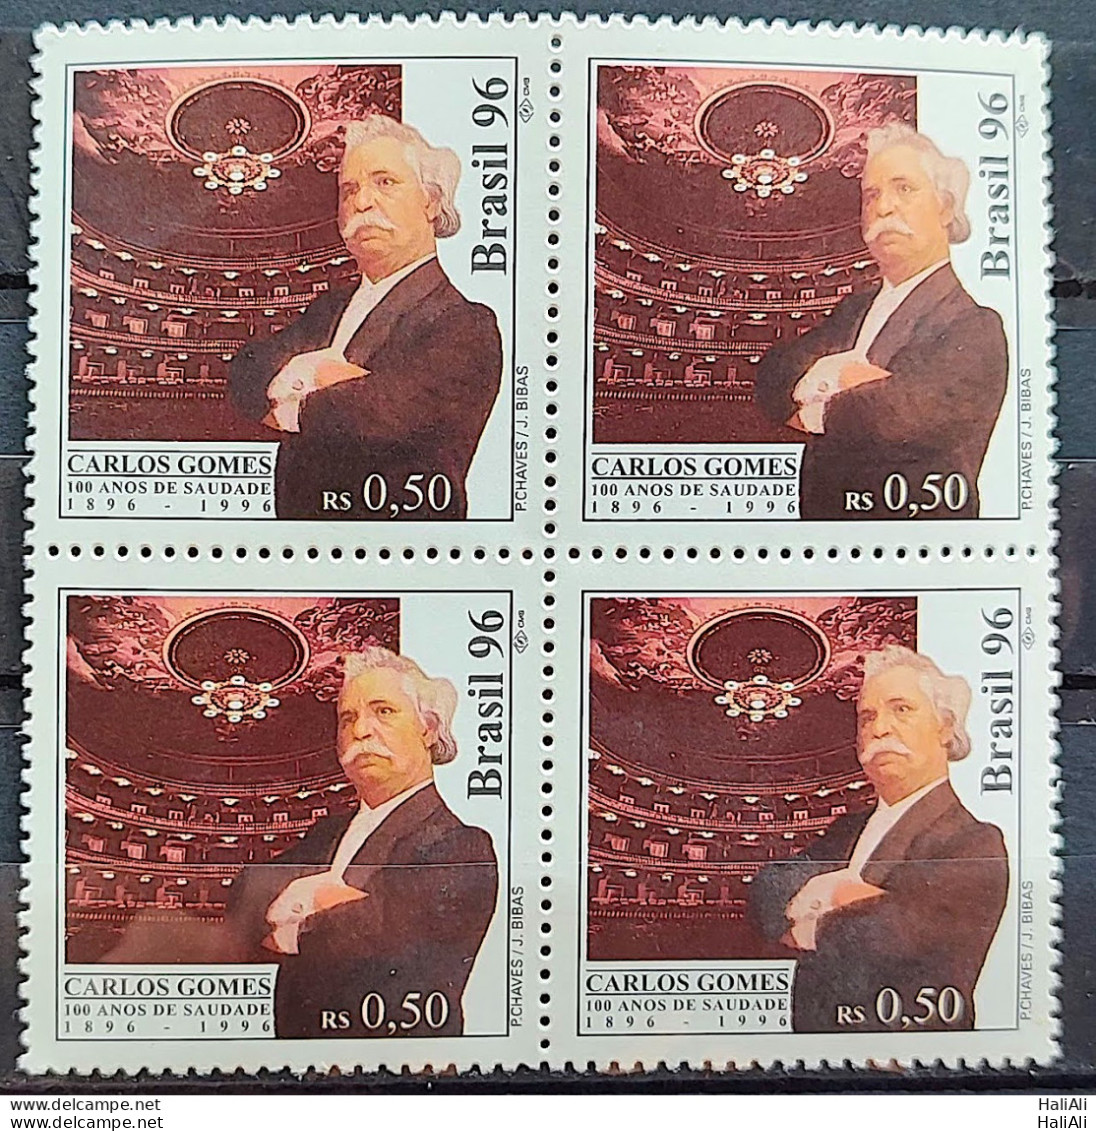 C 2006 Brazil Stamp 100 Years Carlos Gomes Music 1996 Block Of 4 - Unused Stamps